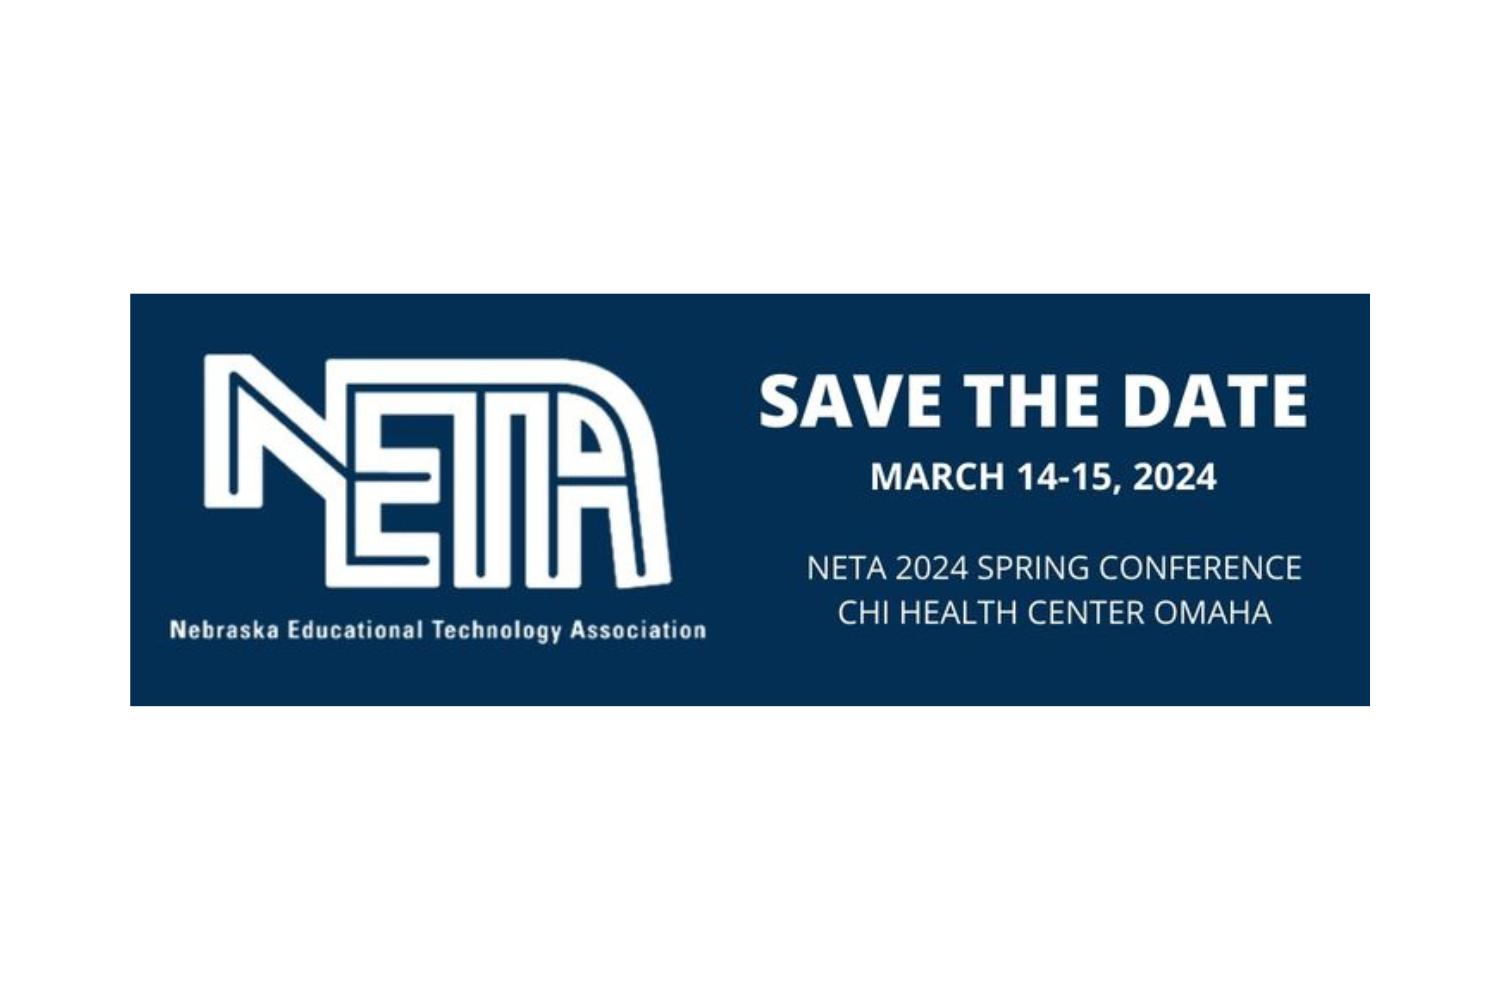 NETA Nebraska Educational Technology Association NETA continuously